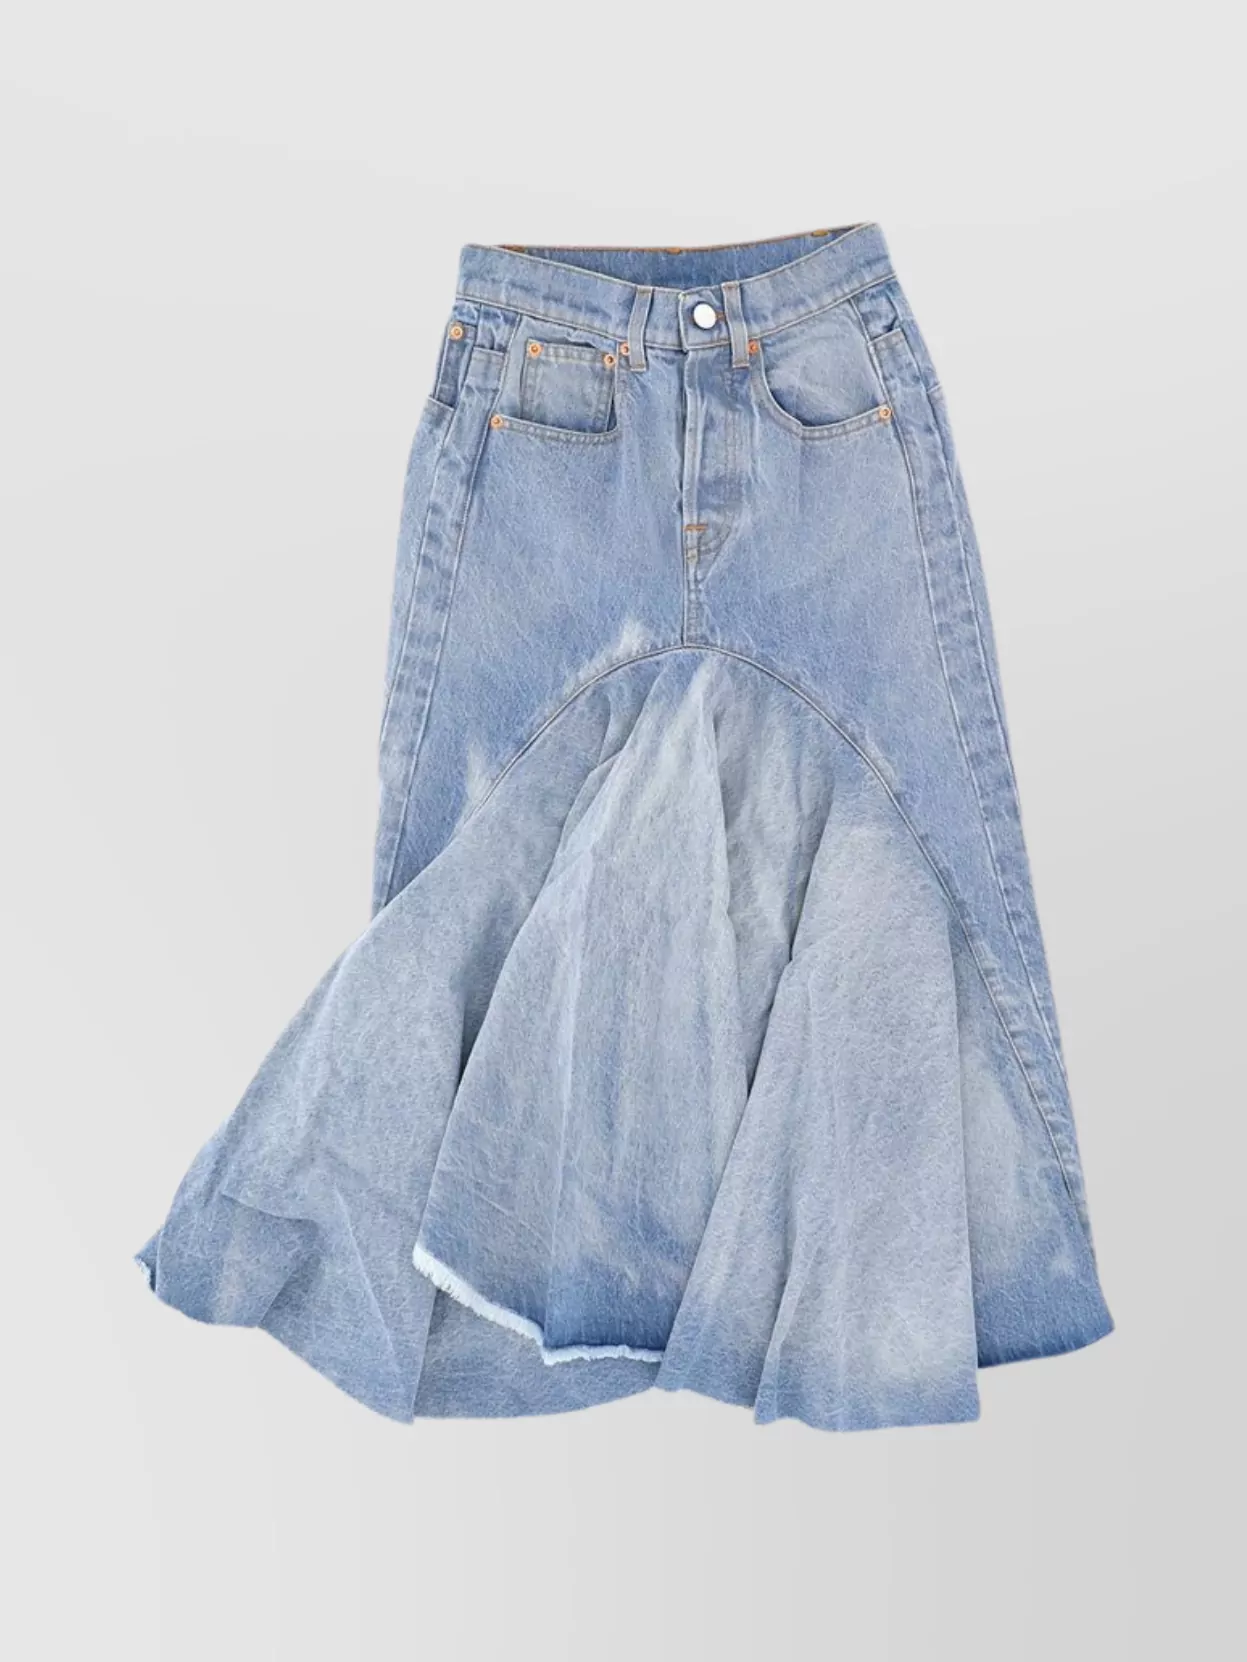 Shop Vetements Denim Skirt Featuring Belt Loops